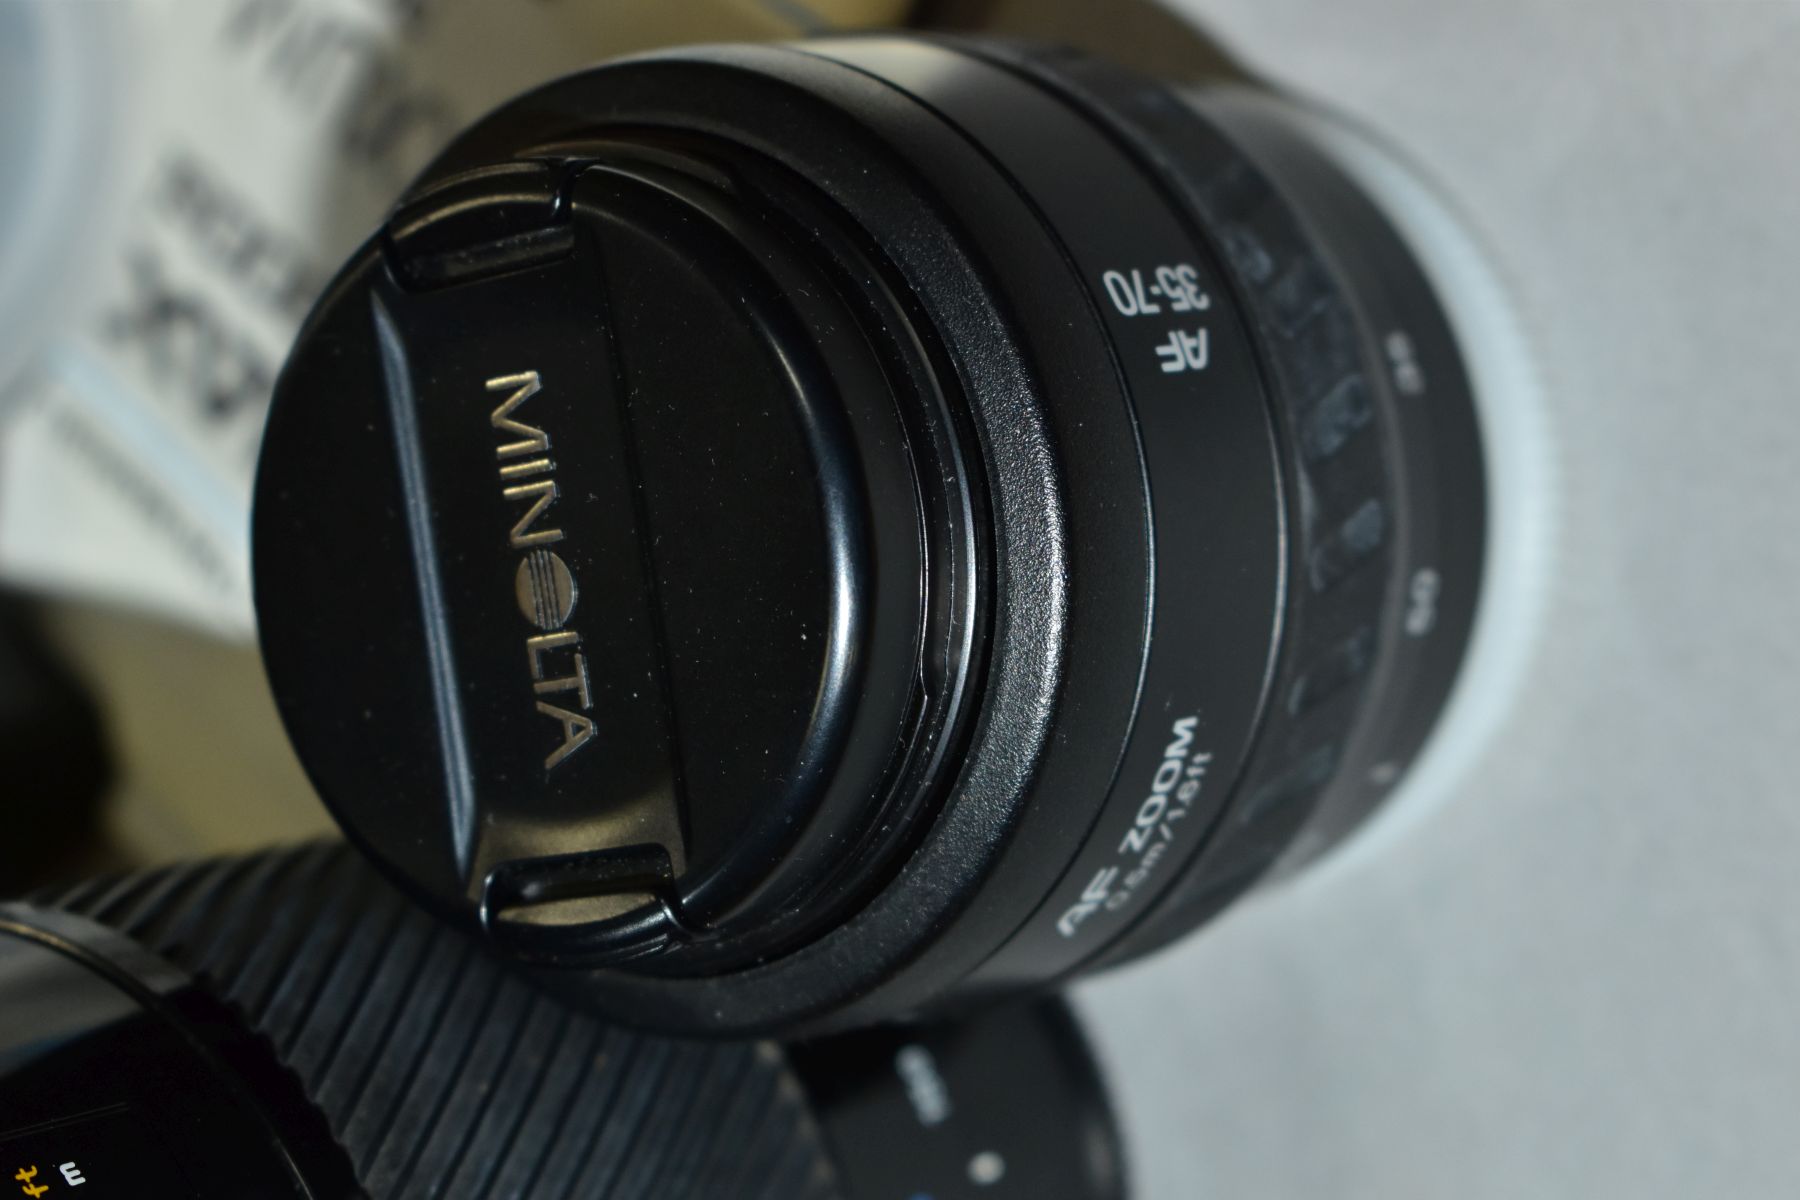 PHOTOGRAPHIC EQUIPMENT comprising a Minolta Dynax 300SI camera body, Minolta 35-70 zoom lens, - Image 4 of 9